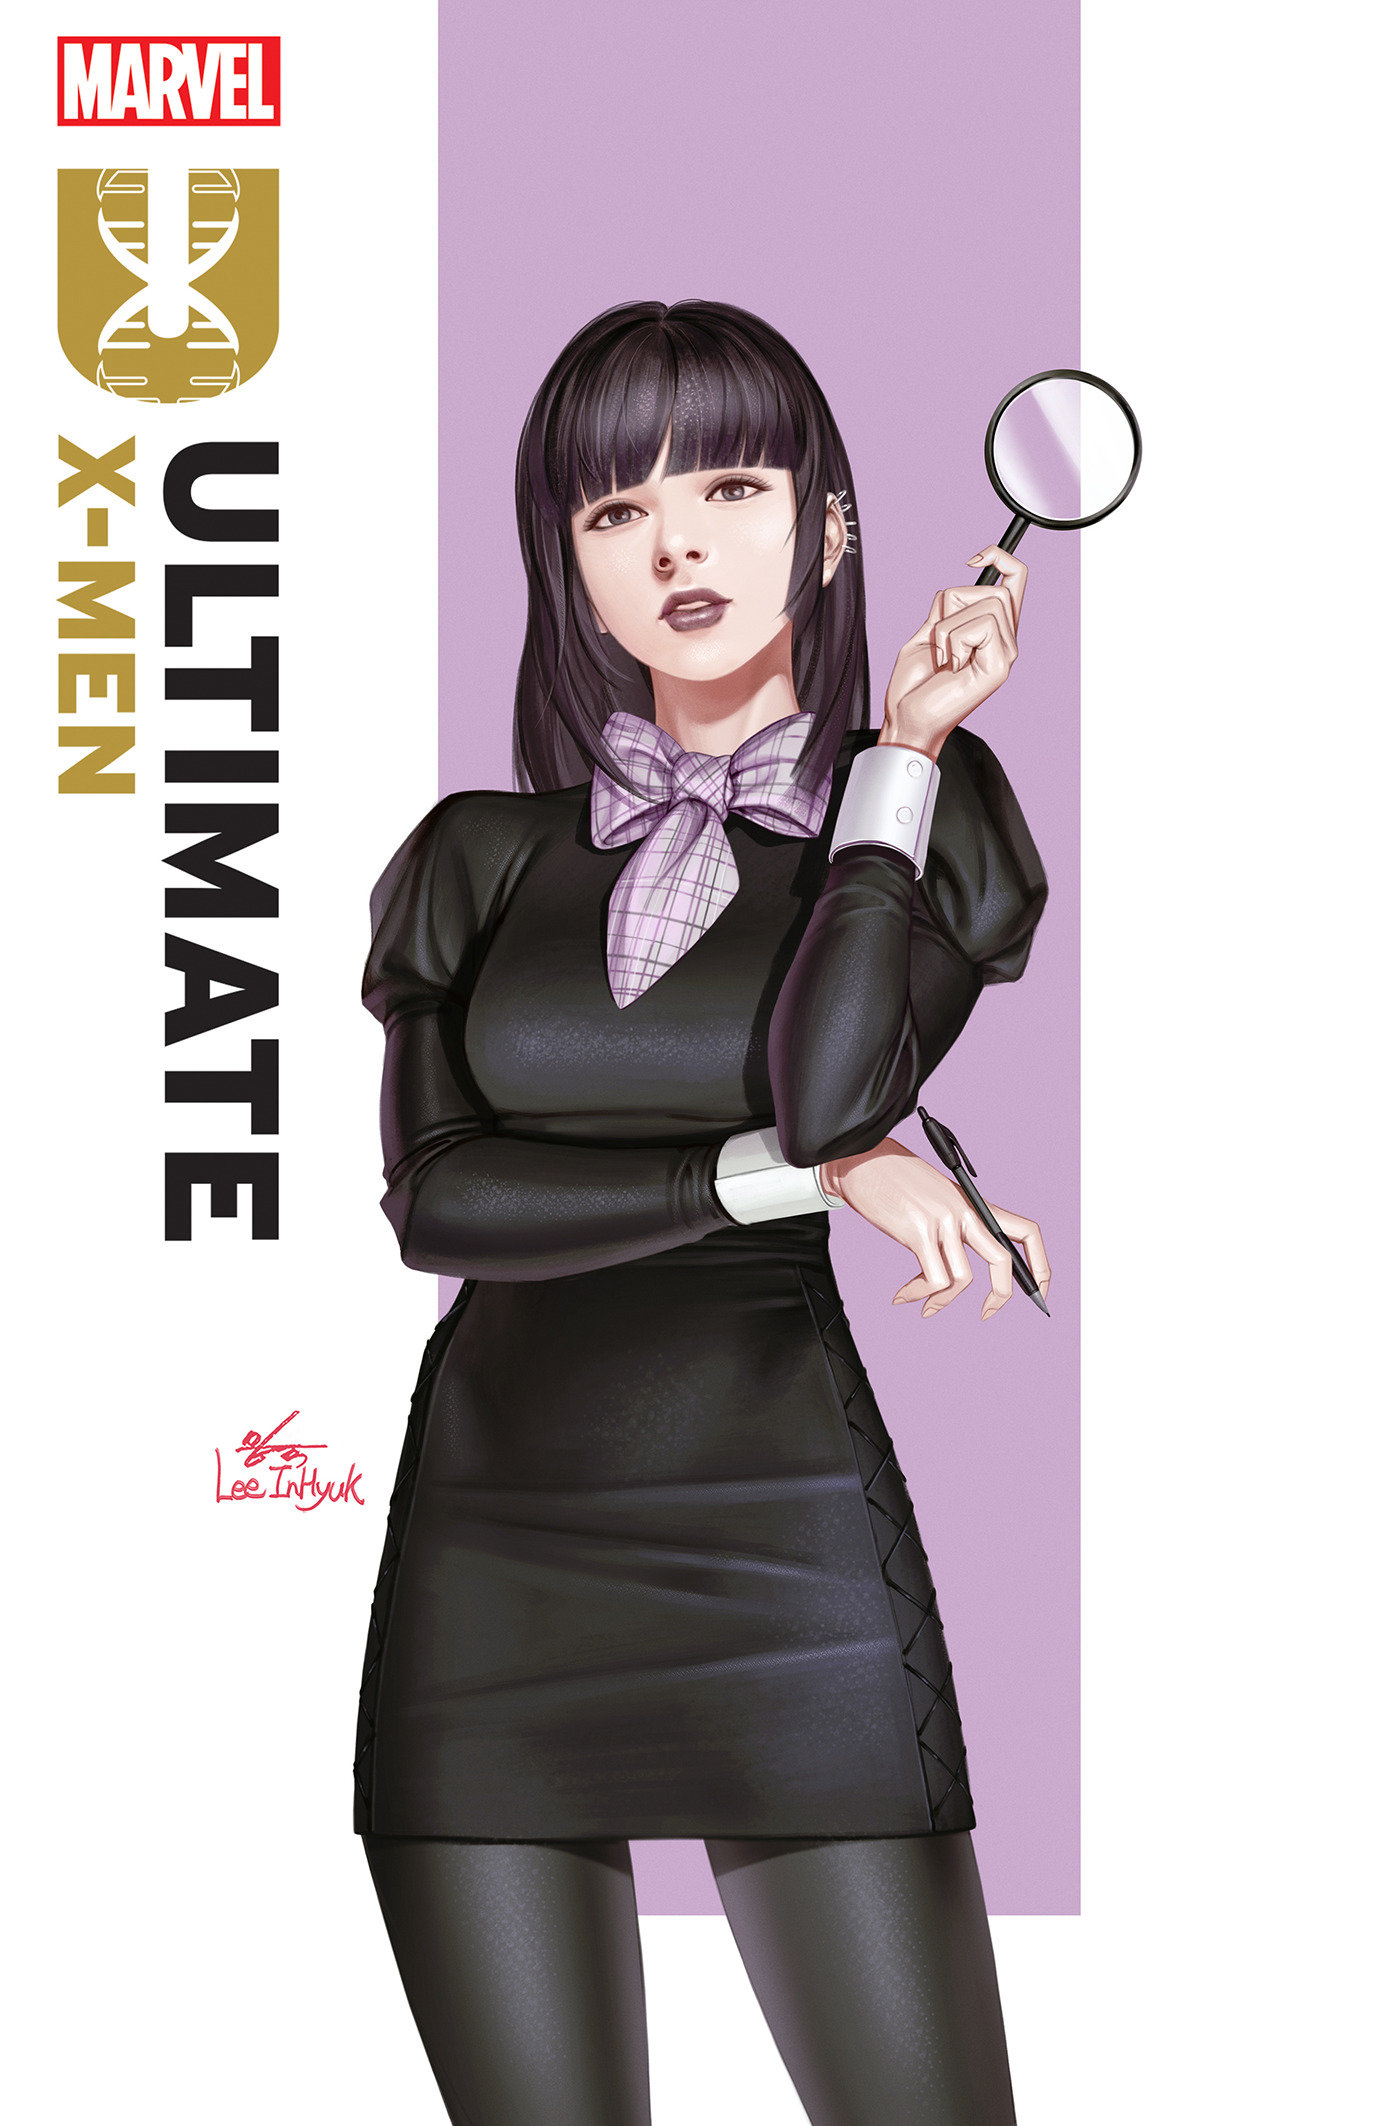 Ultimate X-Men #5 Inhyuk Lee 1 for 25 Incentive Variant